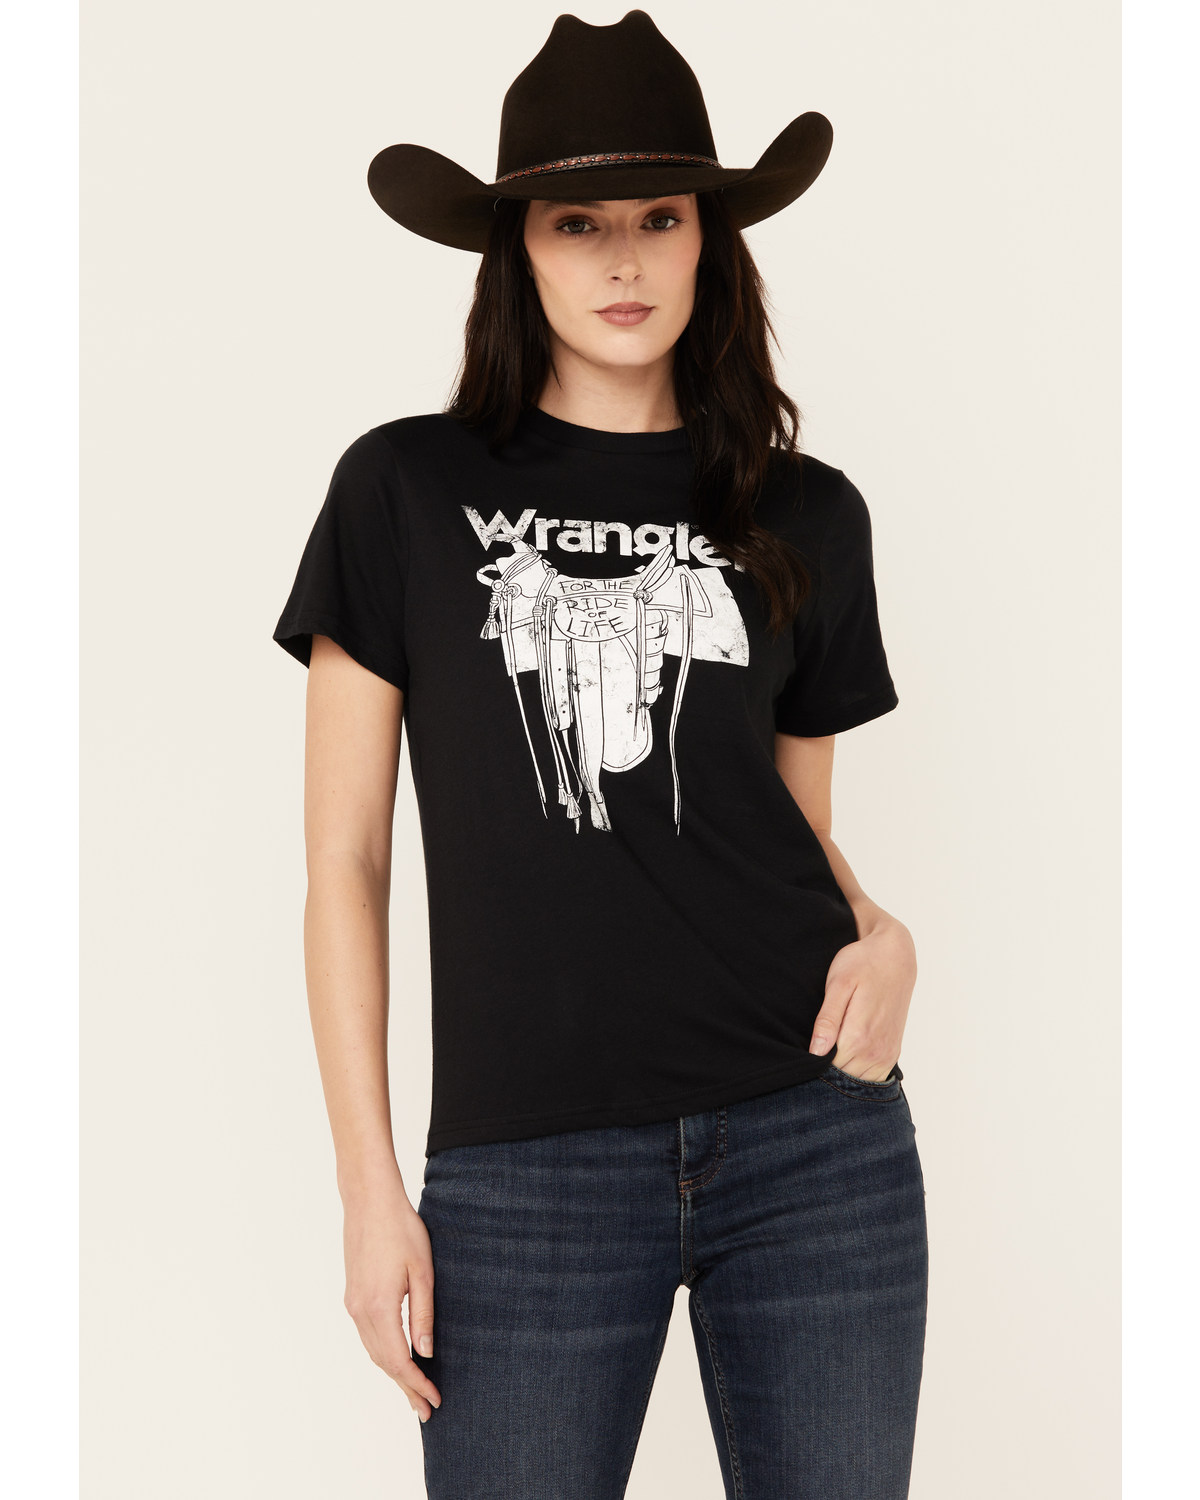 Wrangler Women's Saddle Short Sleeve Graphic Tee